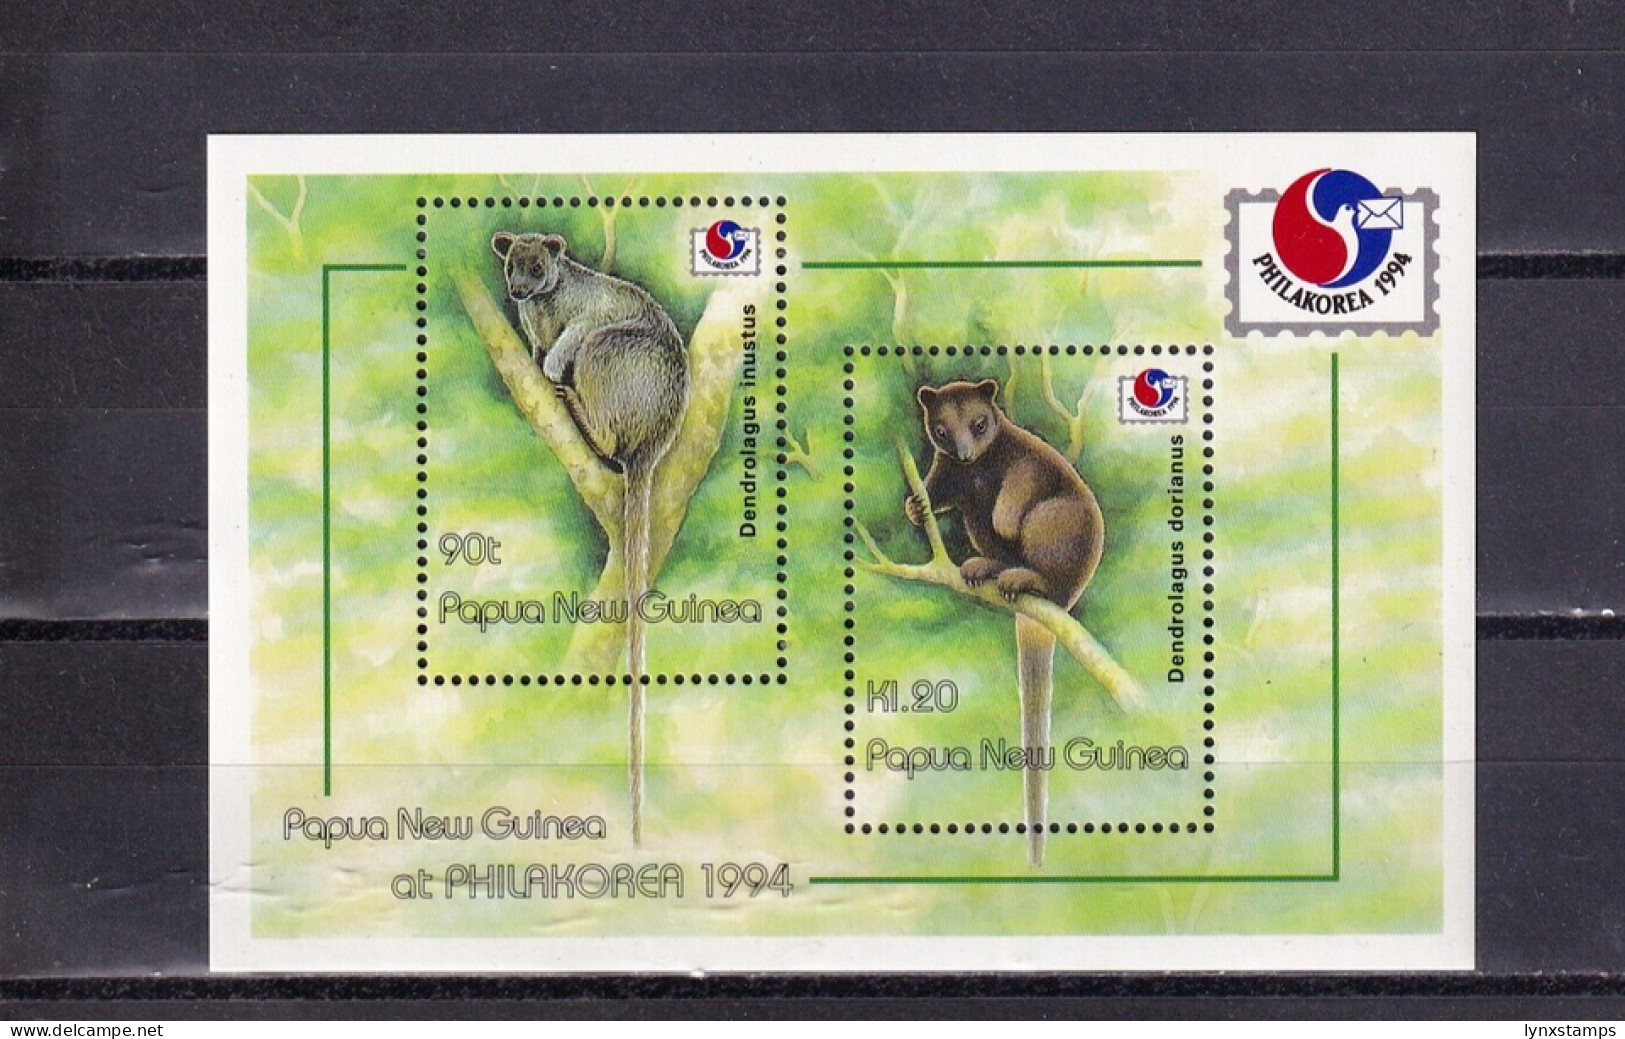 SA04 Papua New Guinea 1994 Inter Stamp Exhibition "Phila Korea '94" Minisheet - Papua-Neuguinea